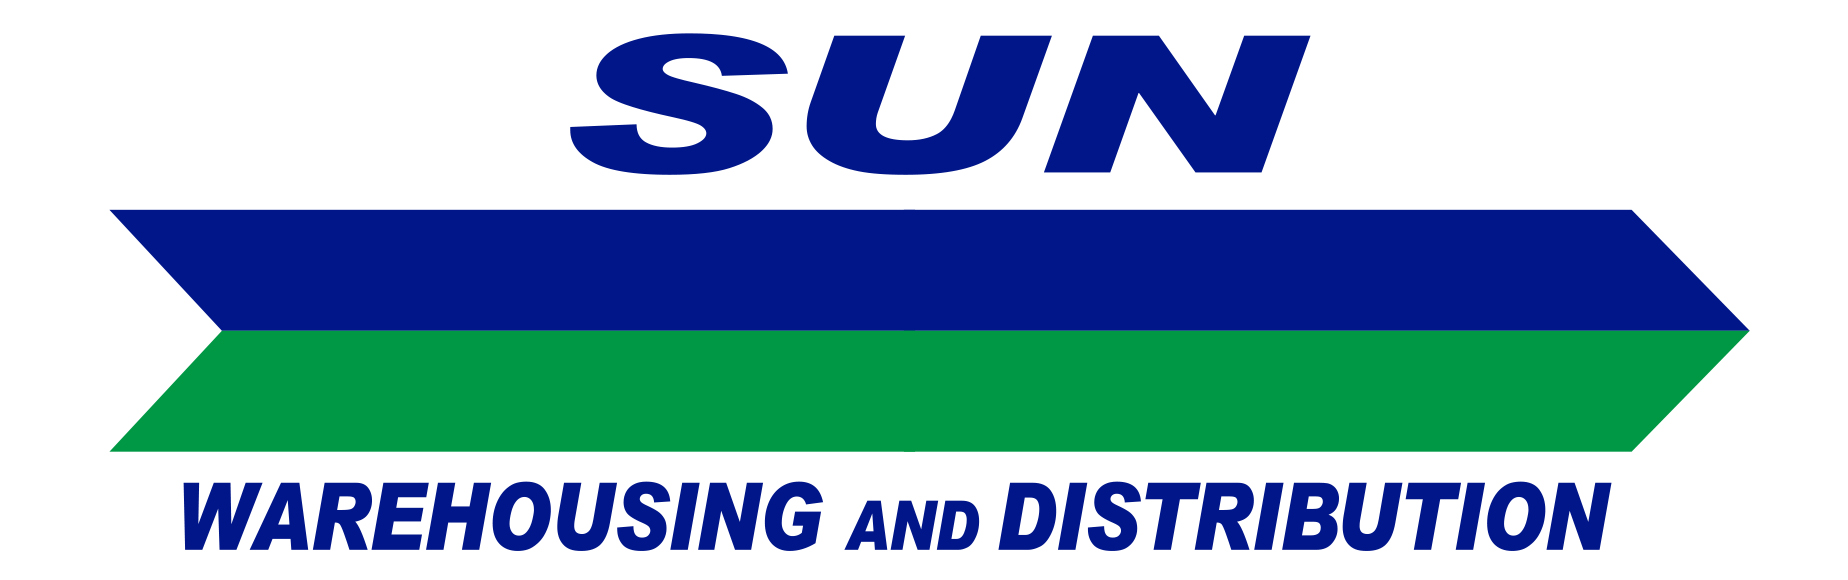 Sun Warehousing and Distribution